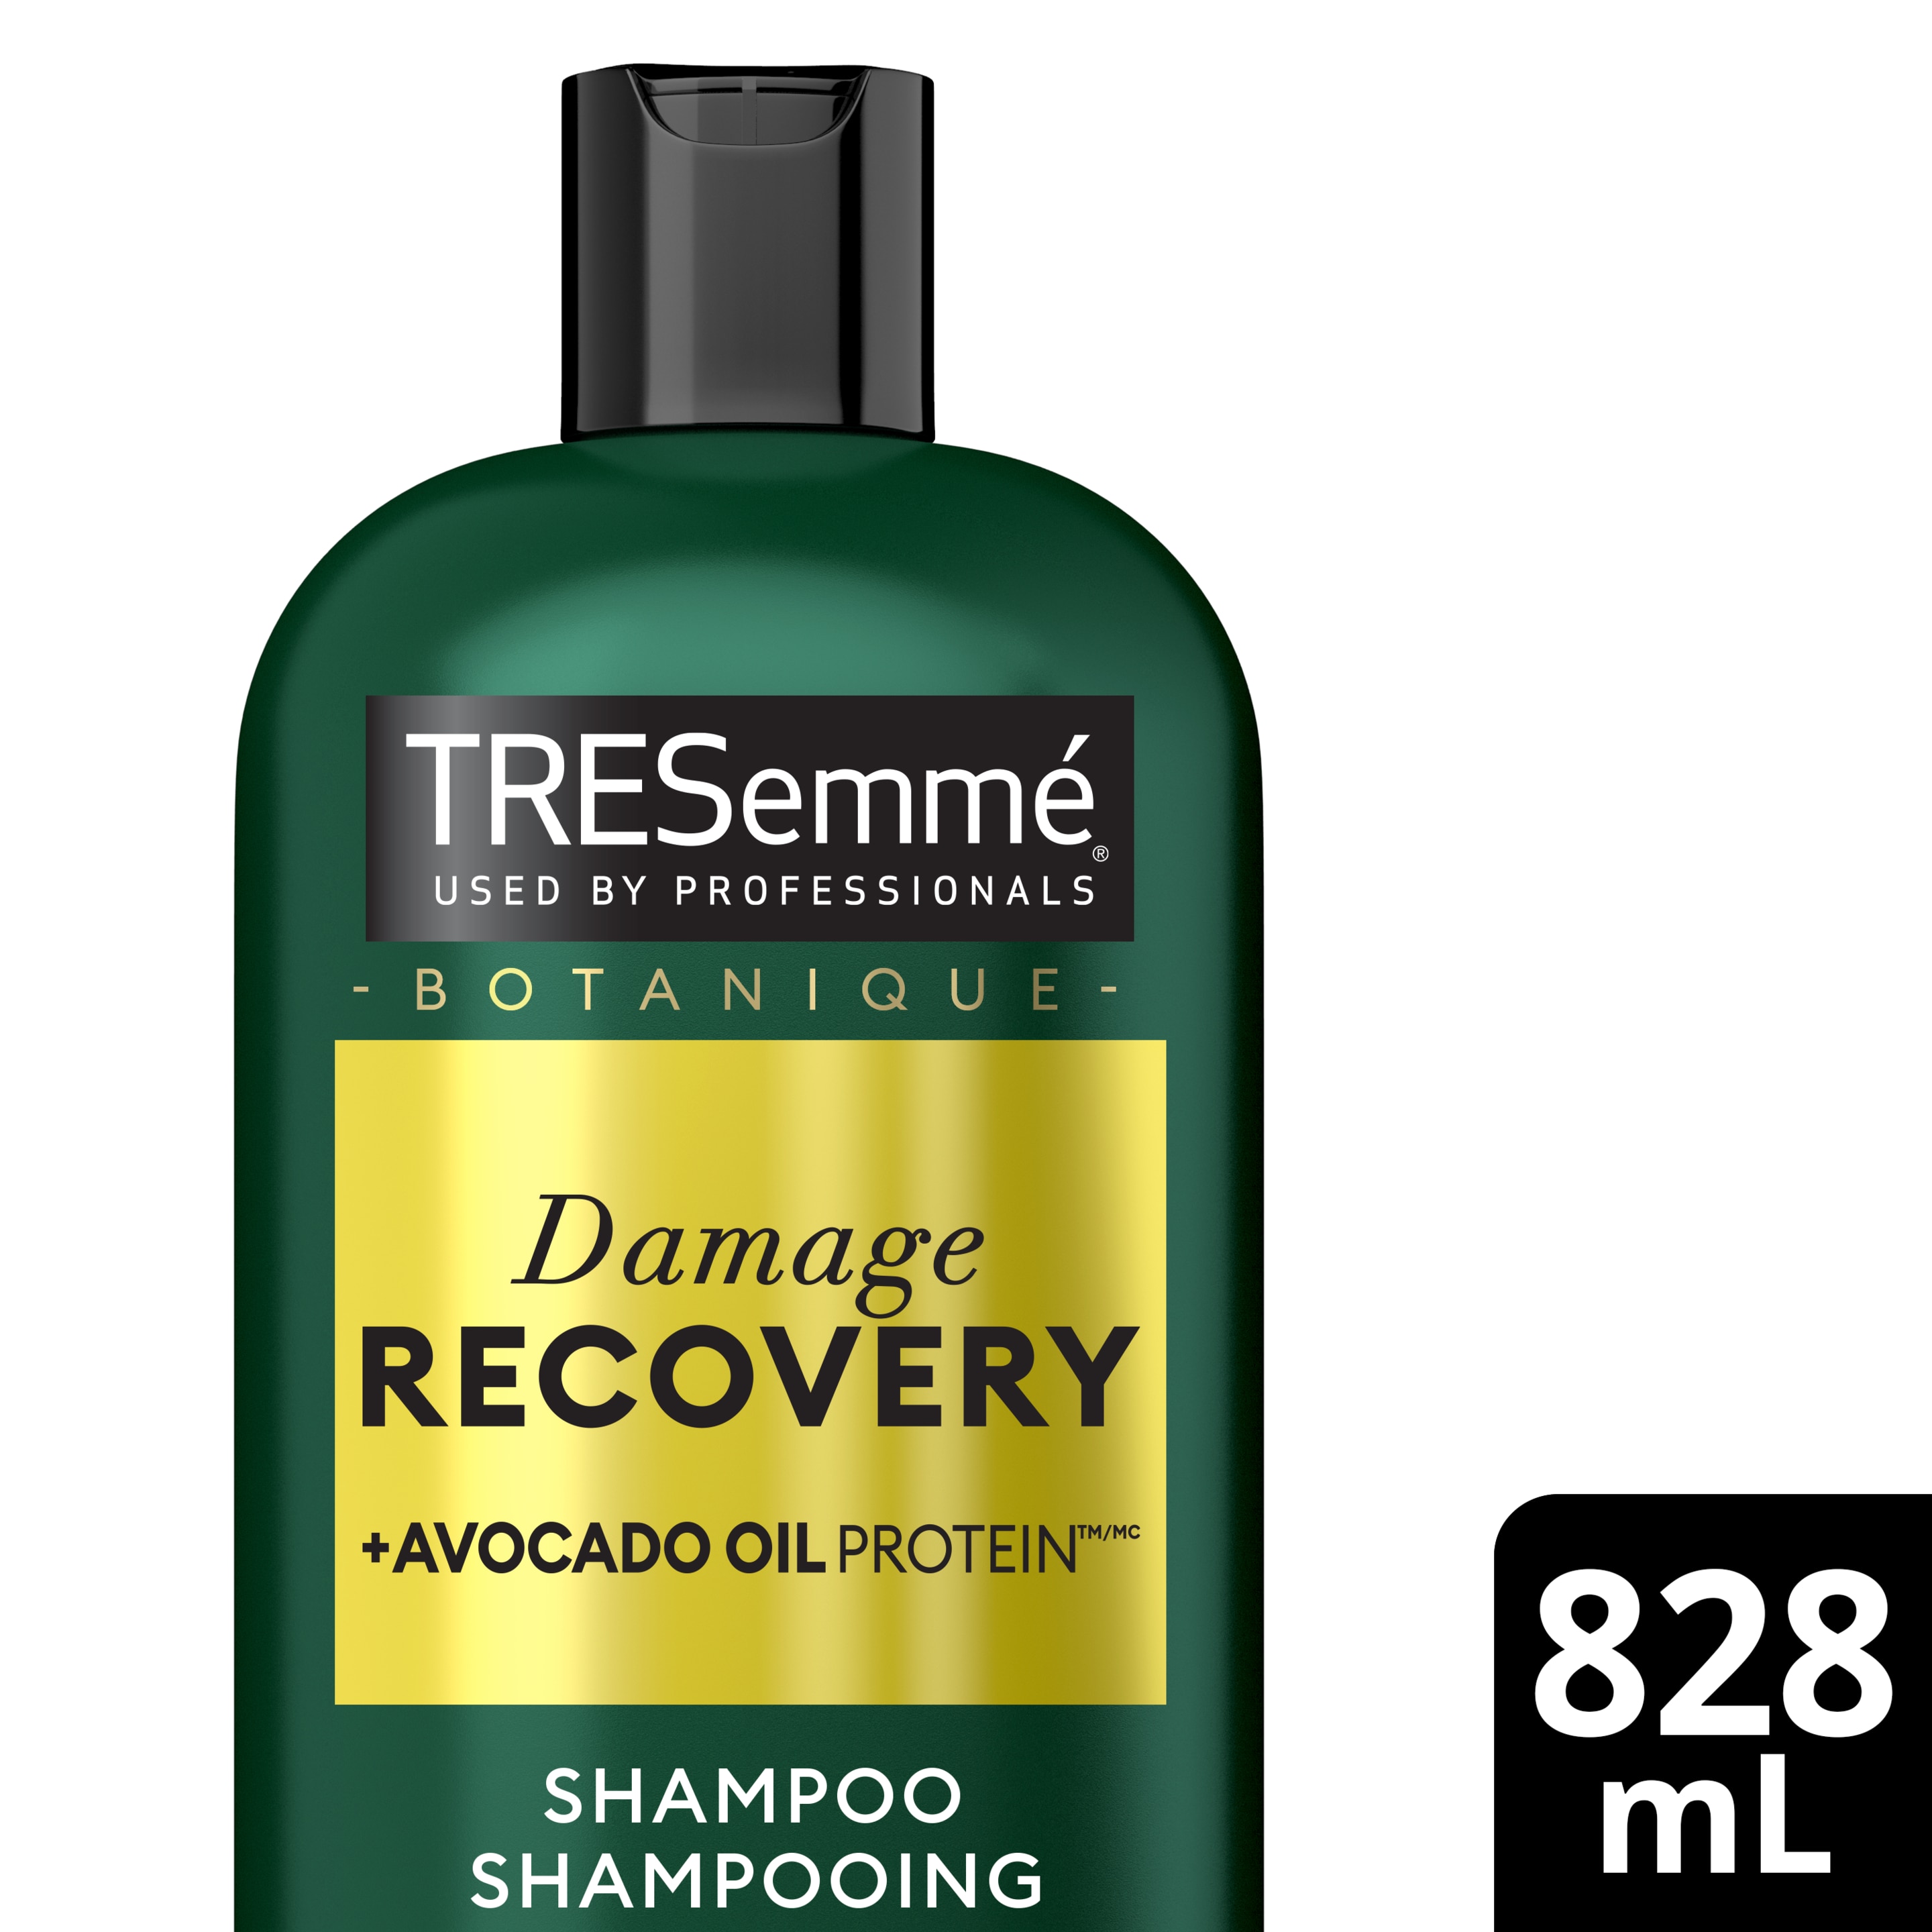 TRESemmé Botanique Damage and Recovery Shampoo 828ml